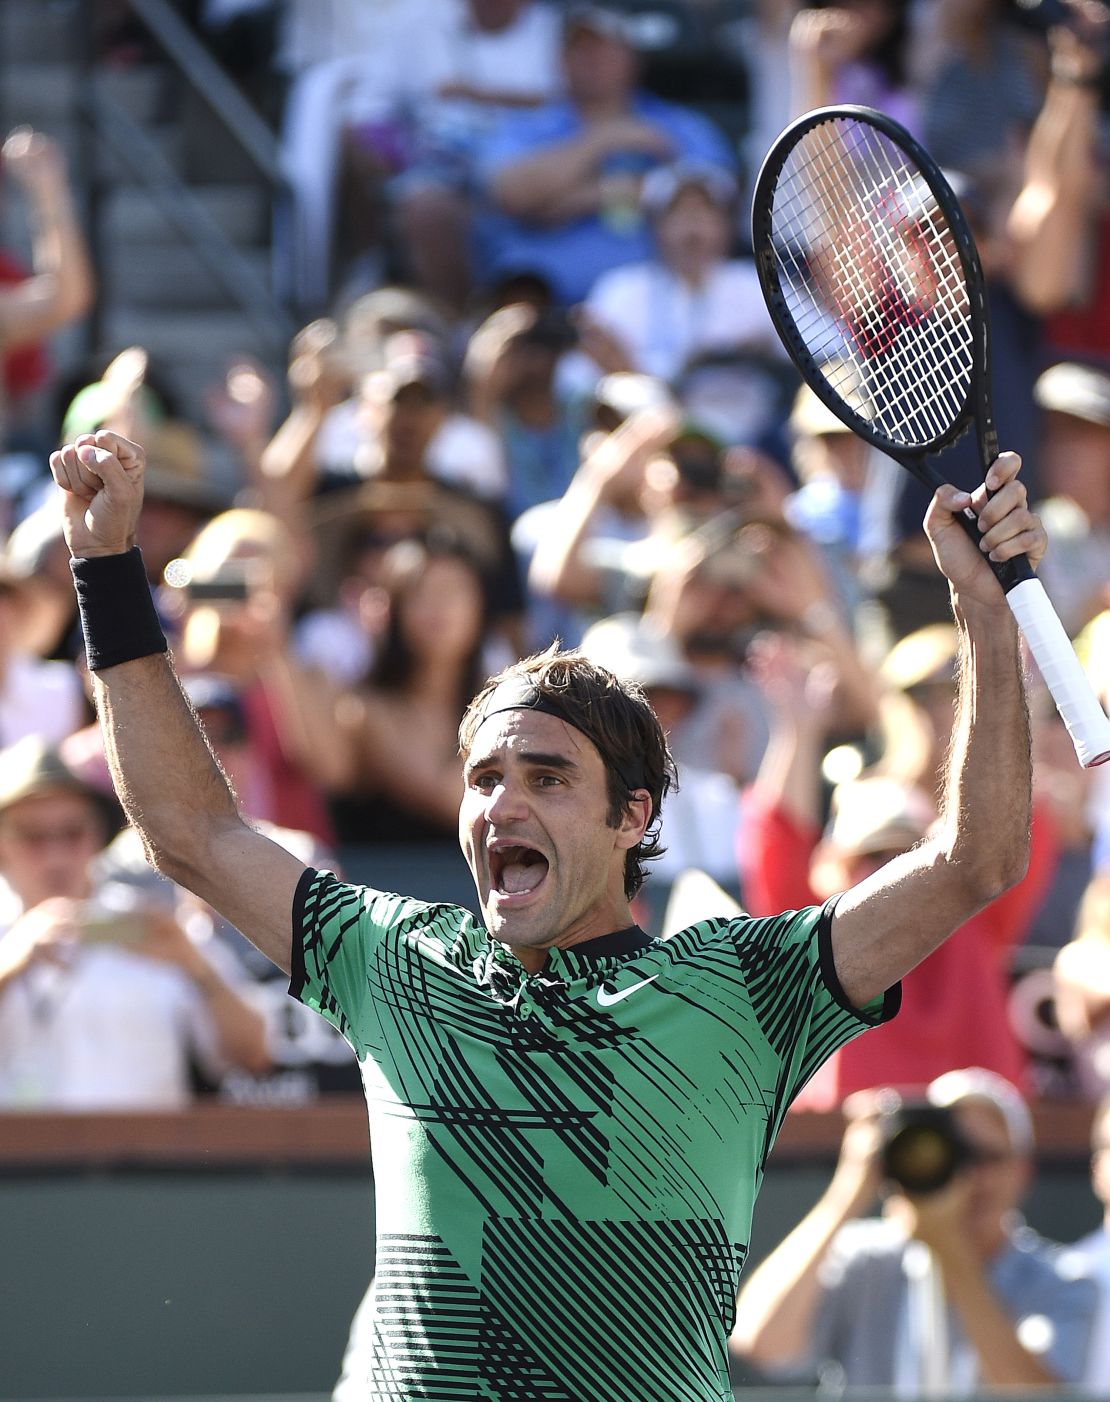 Roger Federer celebrates after defeating Stanislas Wawrinka in the men's final at Indian Wells.